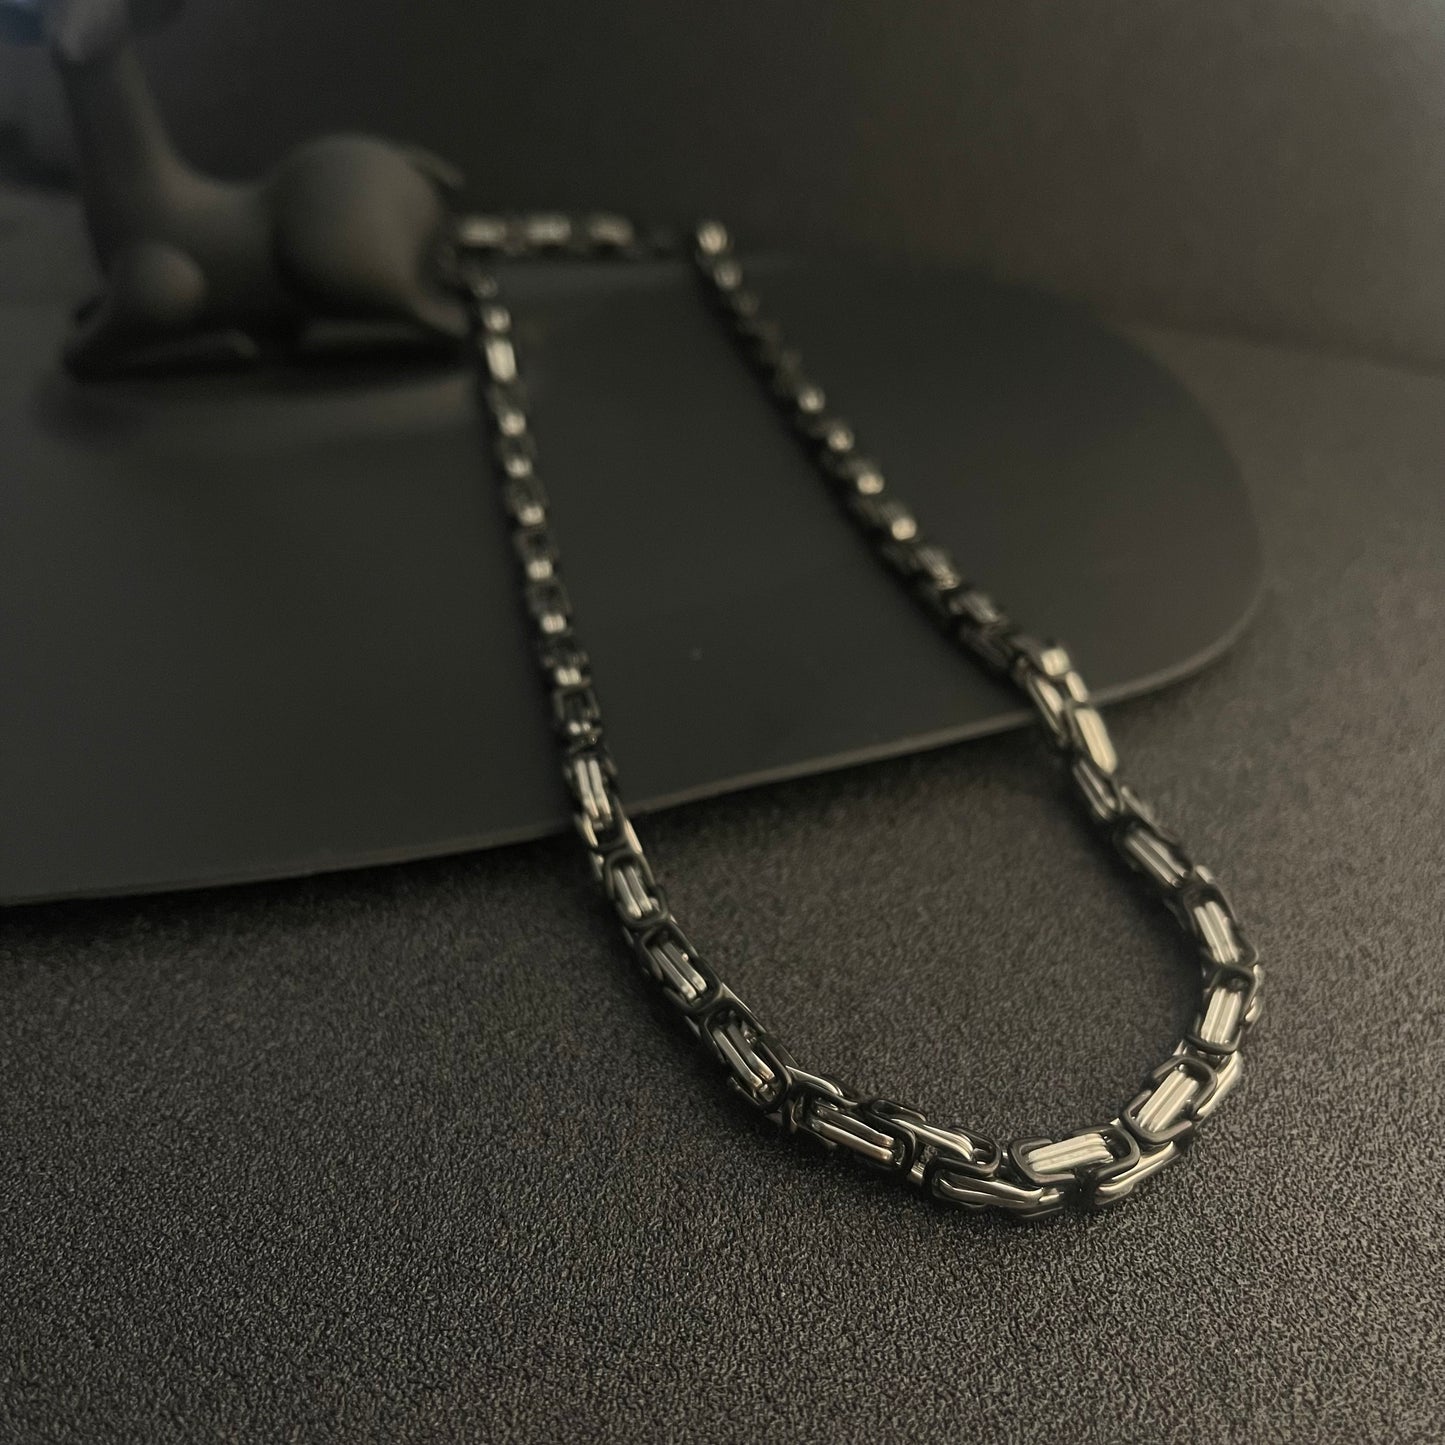 5mm Black silver byzantine link neck chains for men online in Pakistan